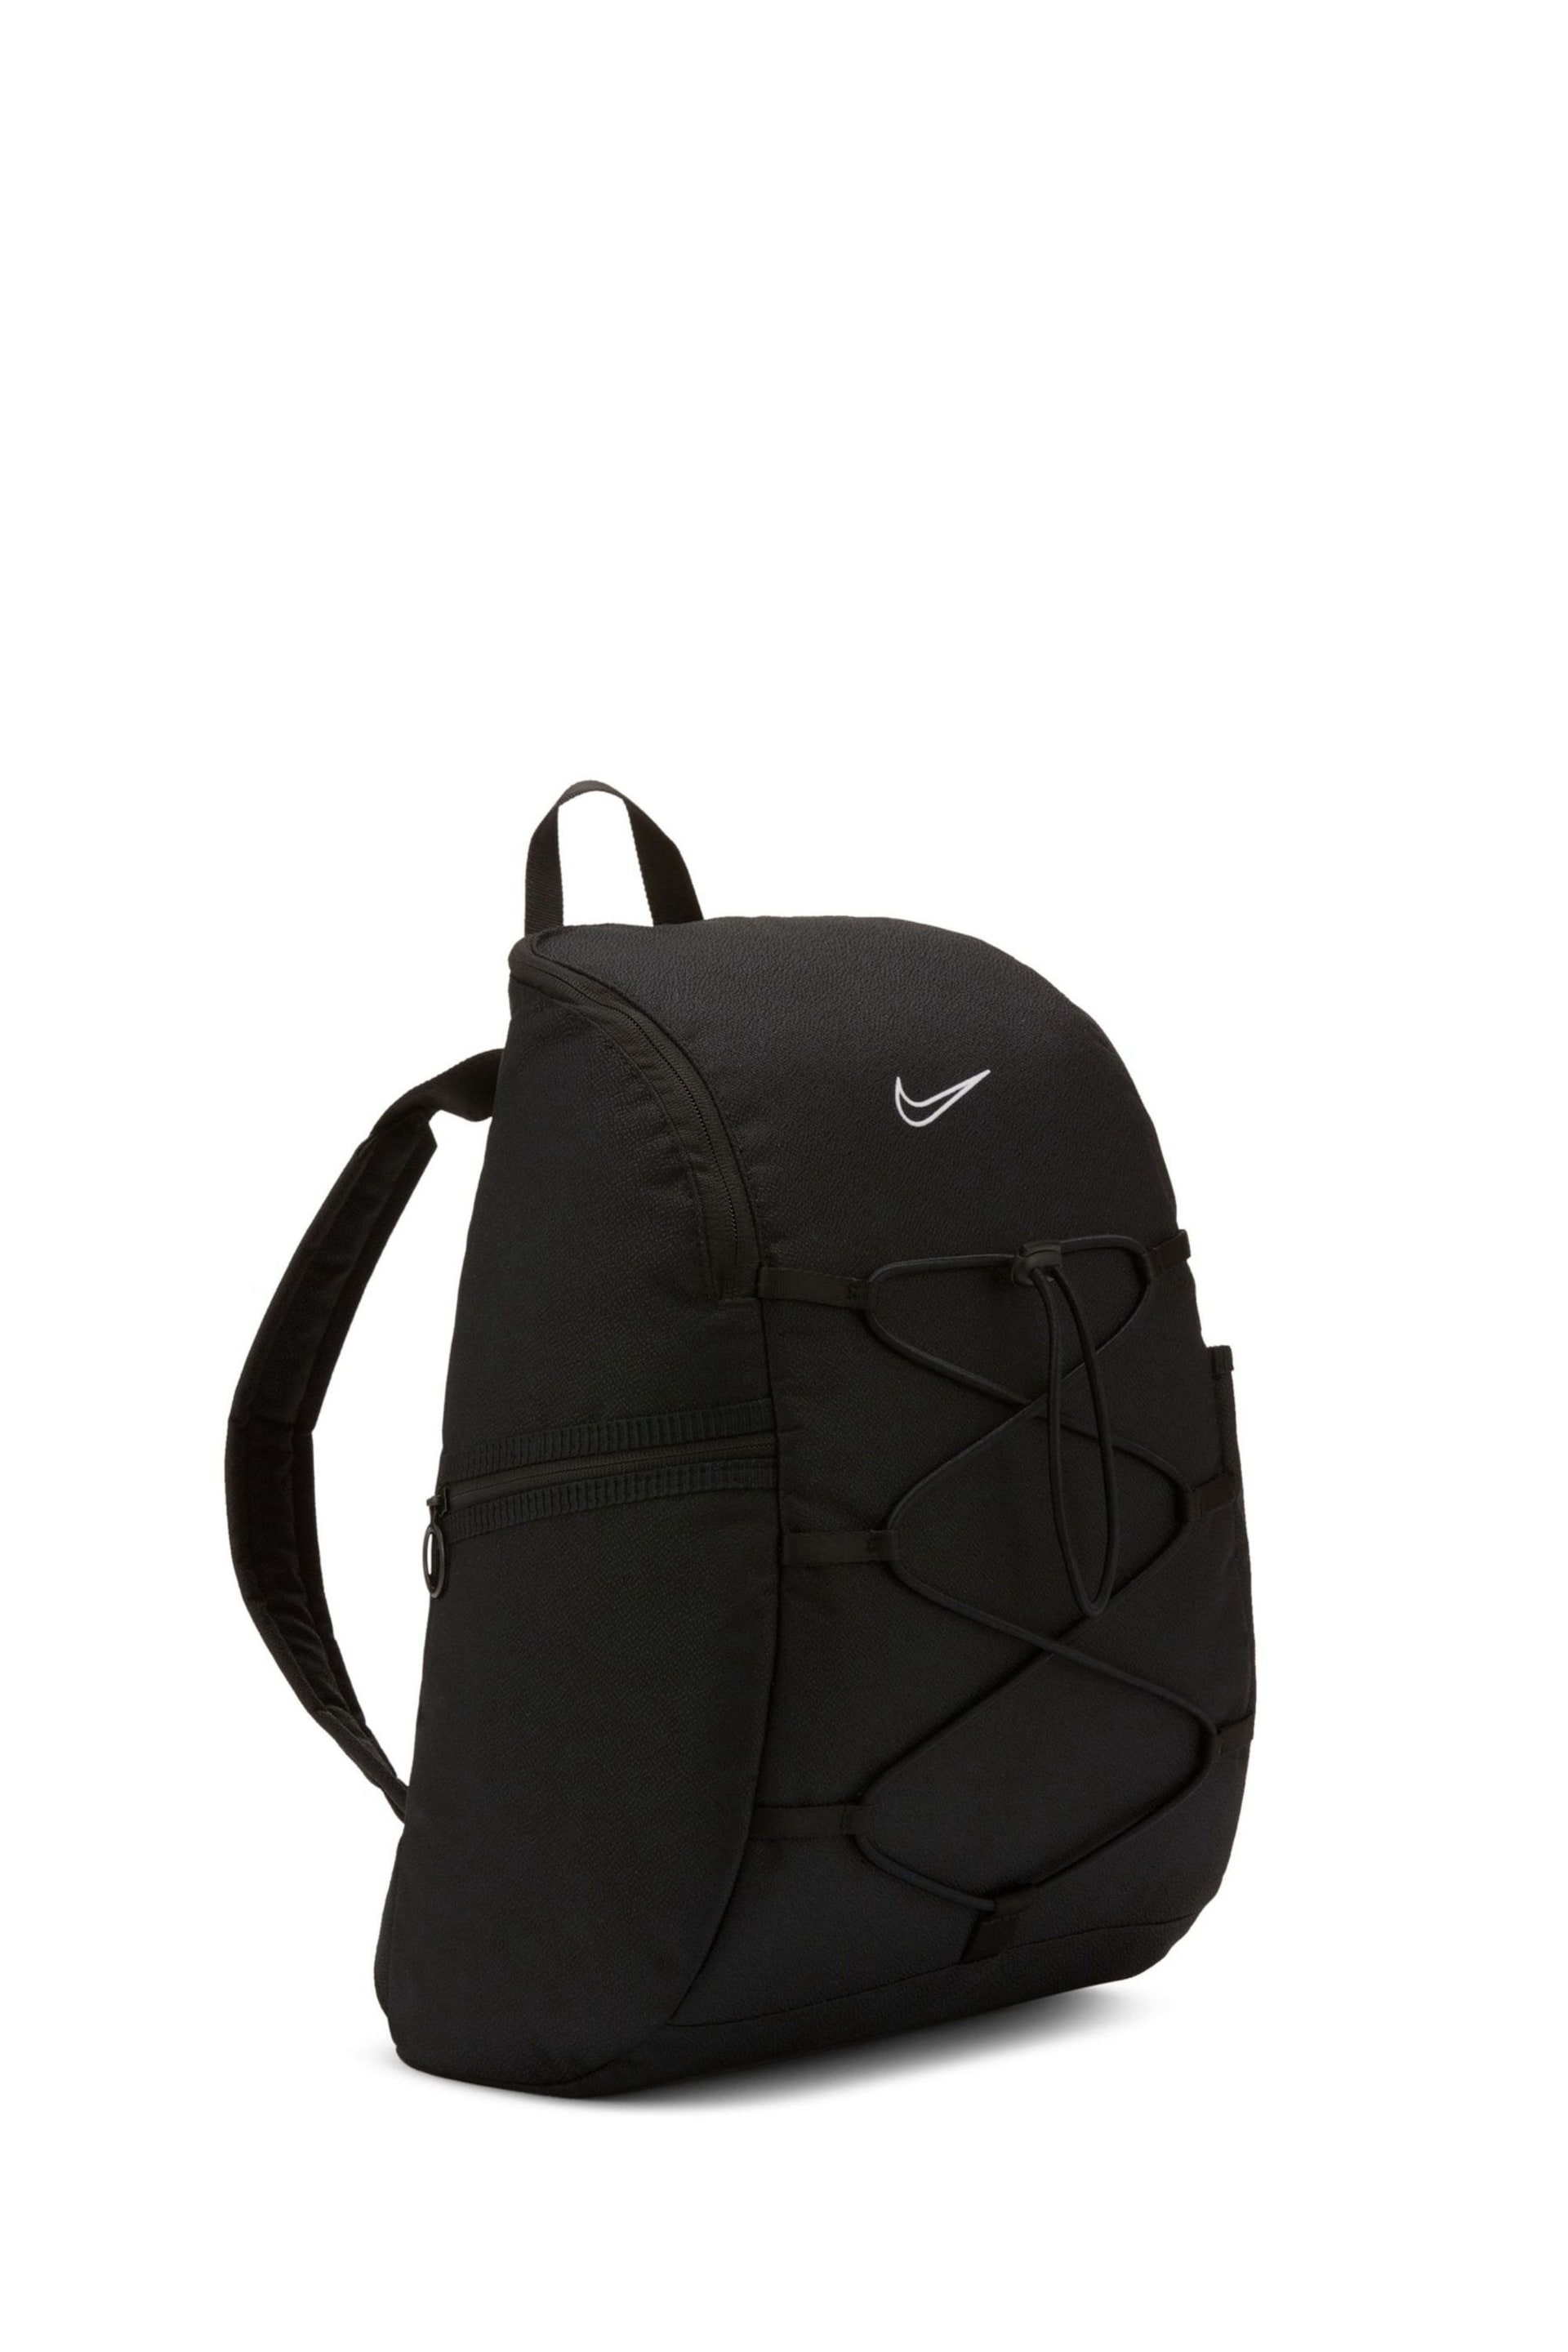 Nike Black One Backpack - Image 3 of 7